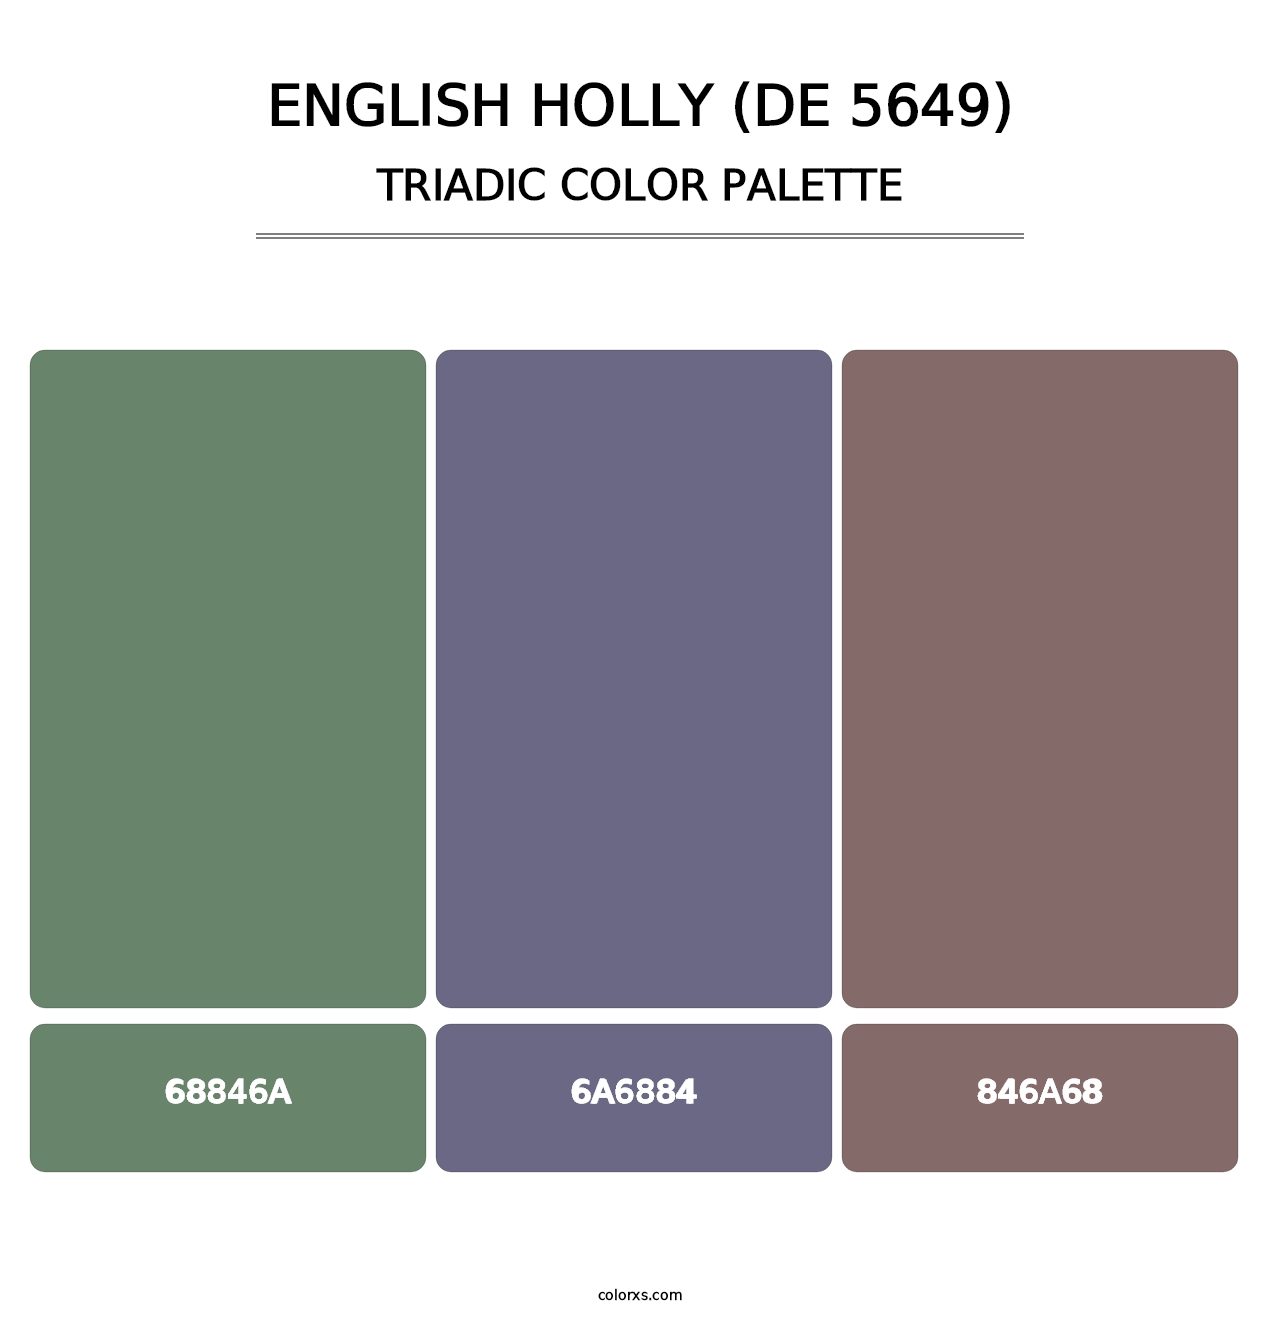 English Holly (DE 5649) - Triadic Color Palette